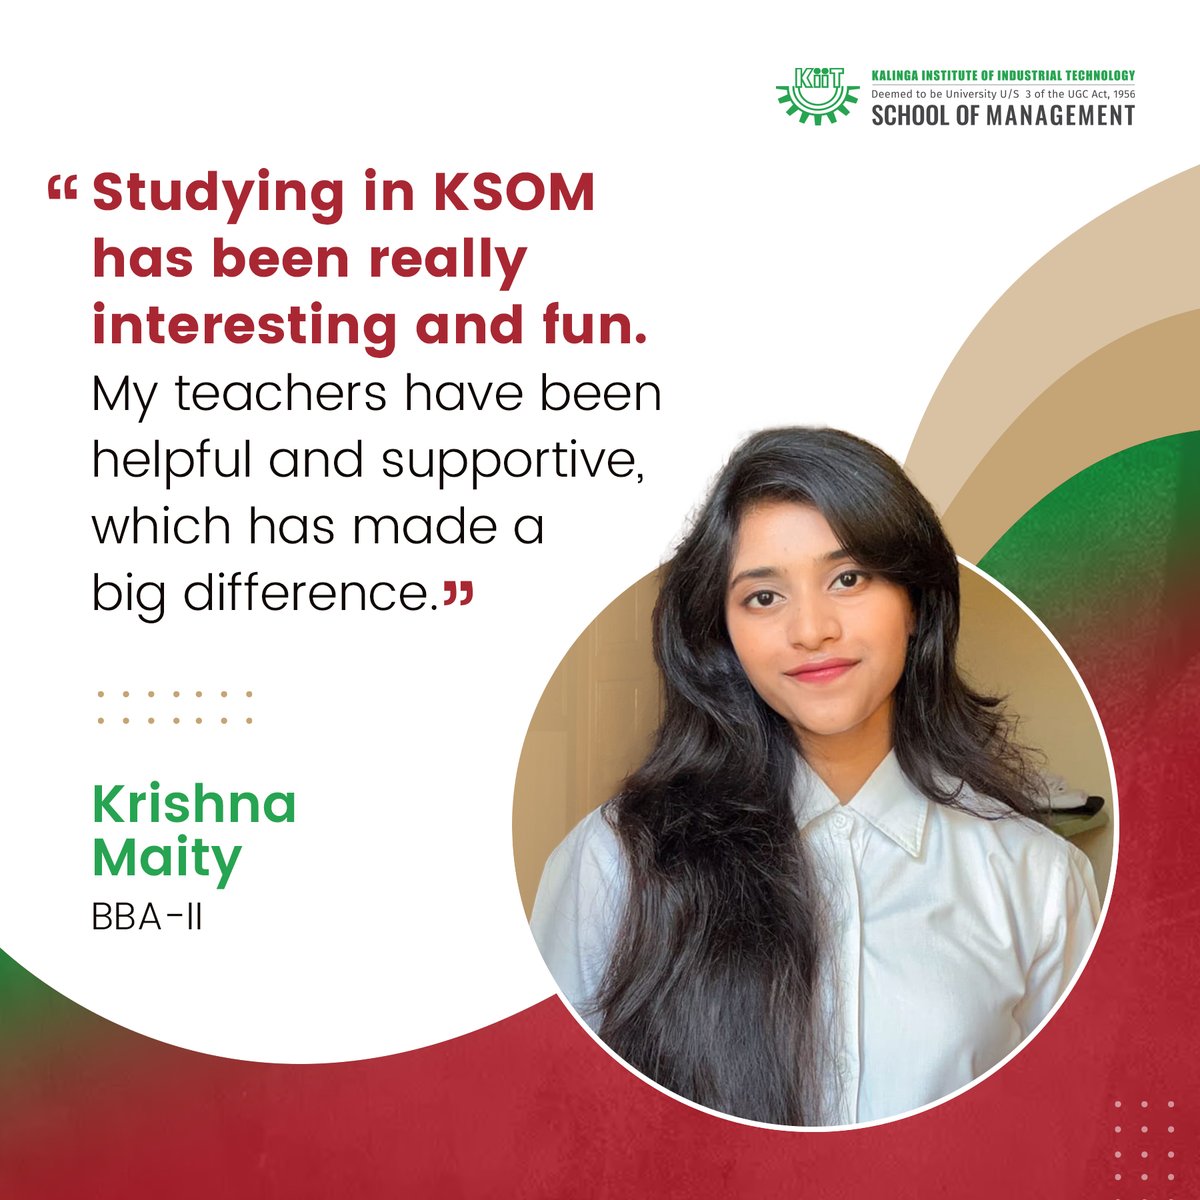 Our BBA student, Krishna Maity, tells us how she's been able to shape her career through the supportive environment of KSOM.

#ksombbsr #BBA #kiit #Bhubaneswar #topbschools #lifeatksom #kiitee #kiitians #odisha